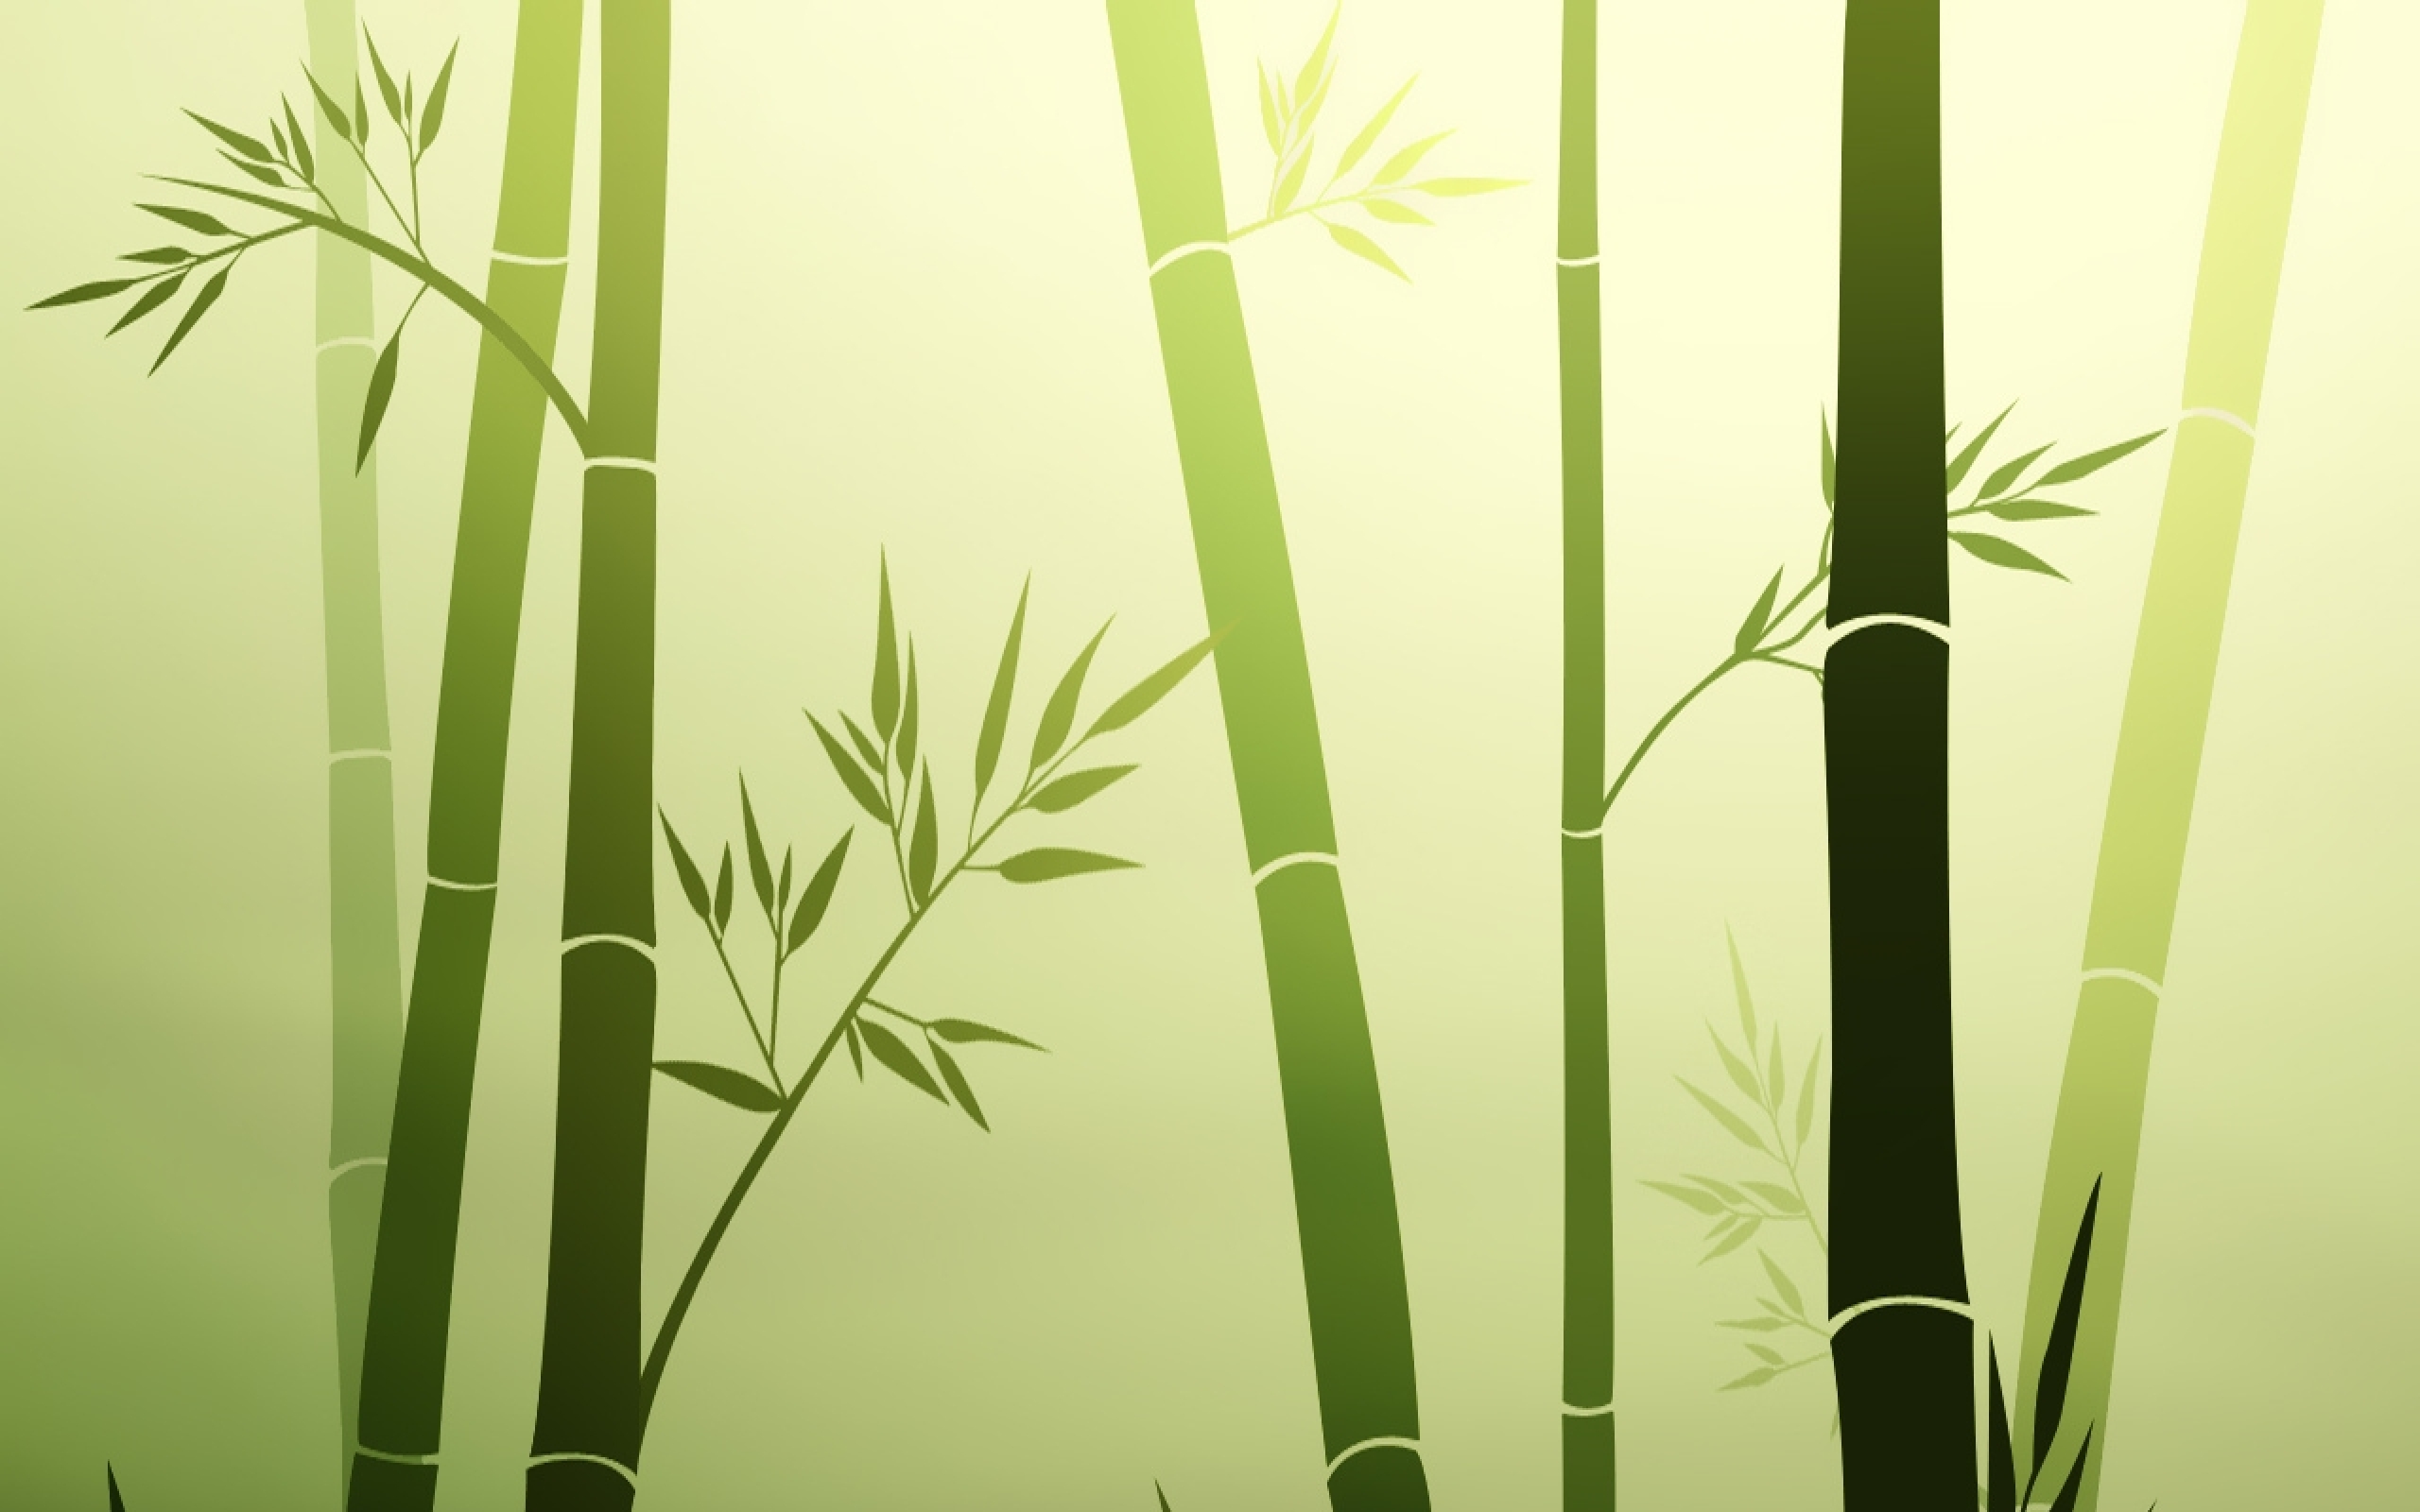 bamboo powerpoint presentation background